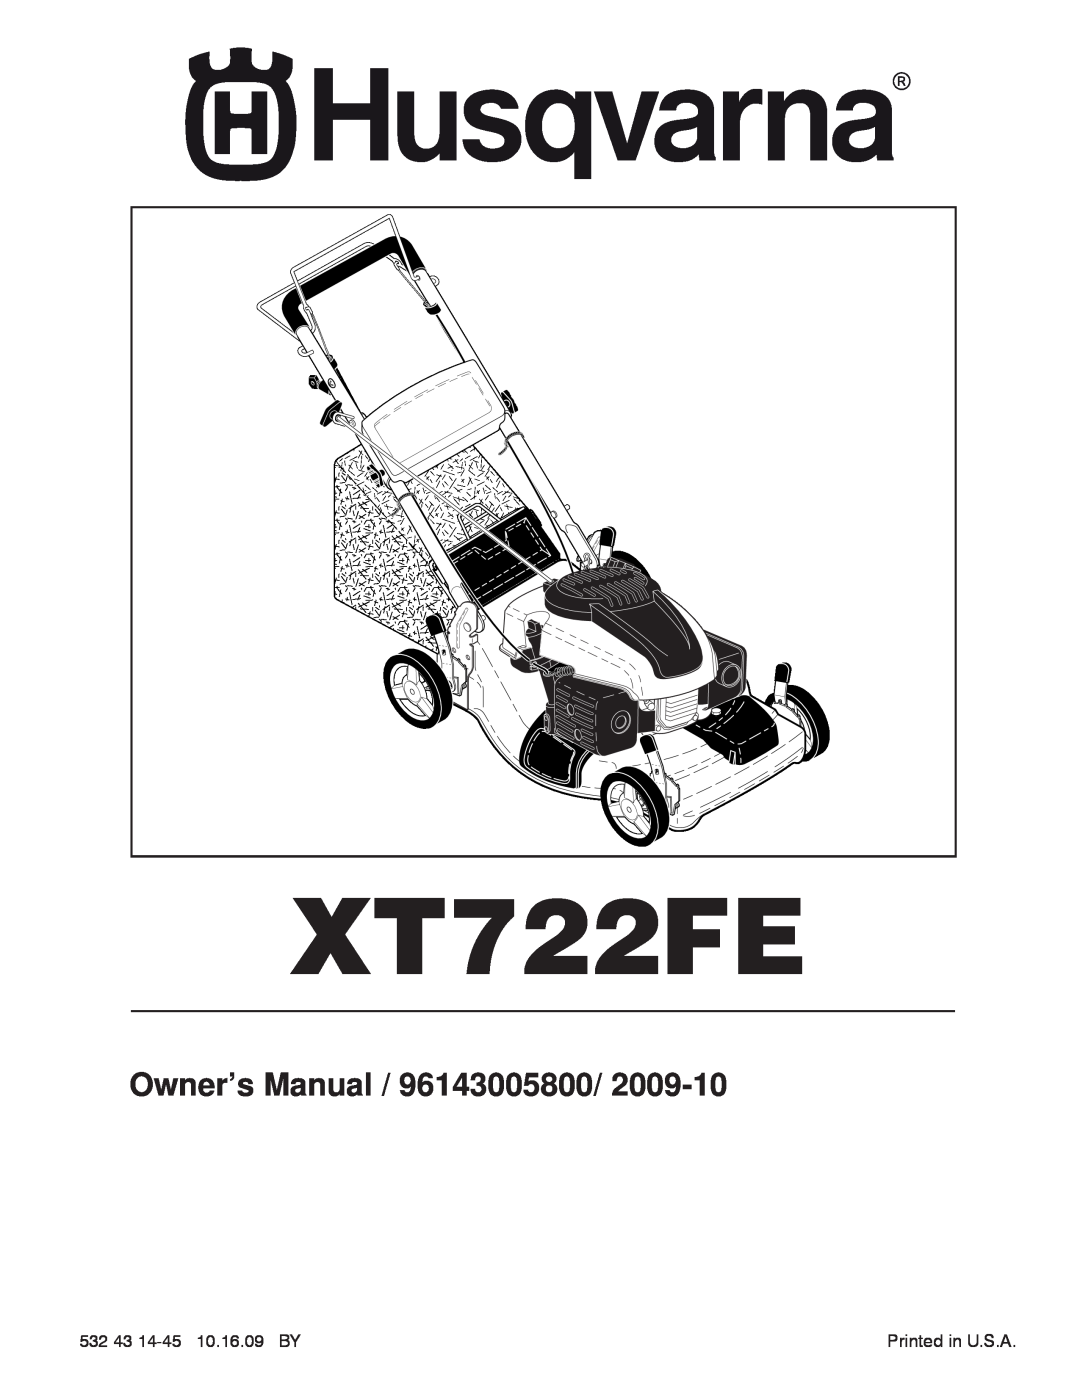 Husqvarna XT722FE owner manual 